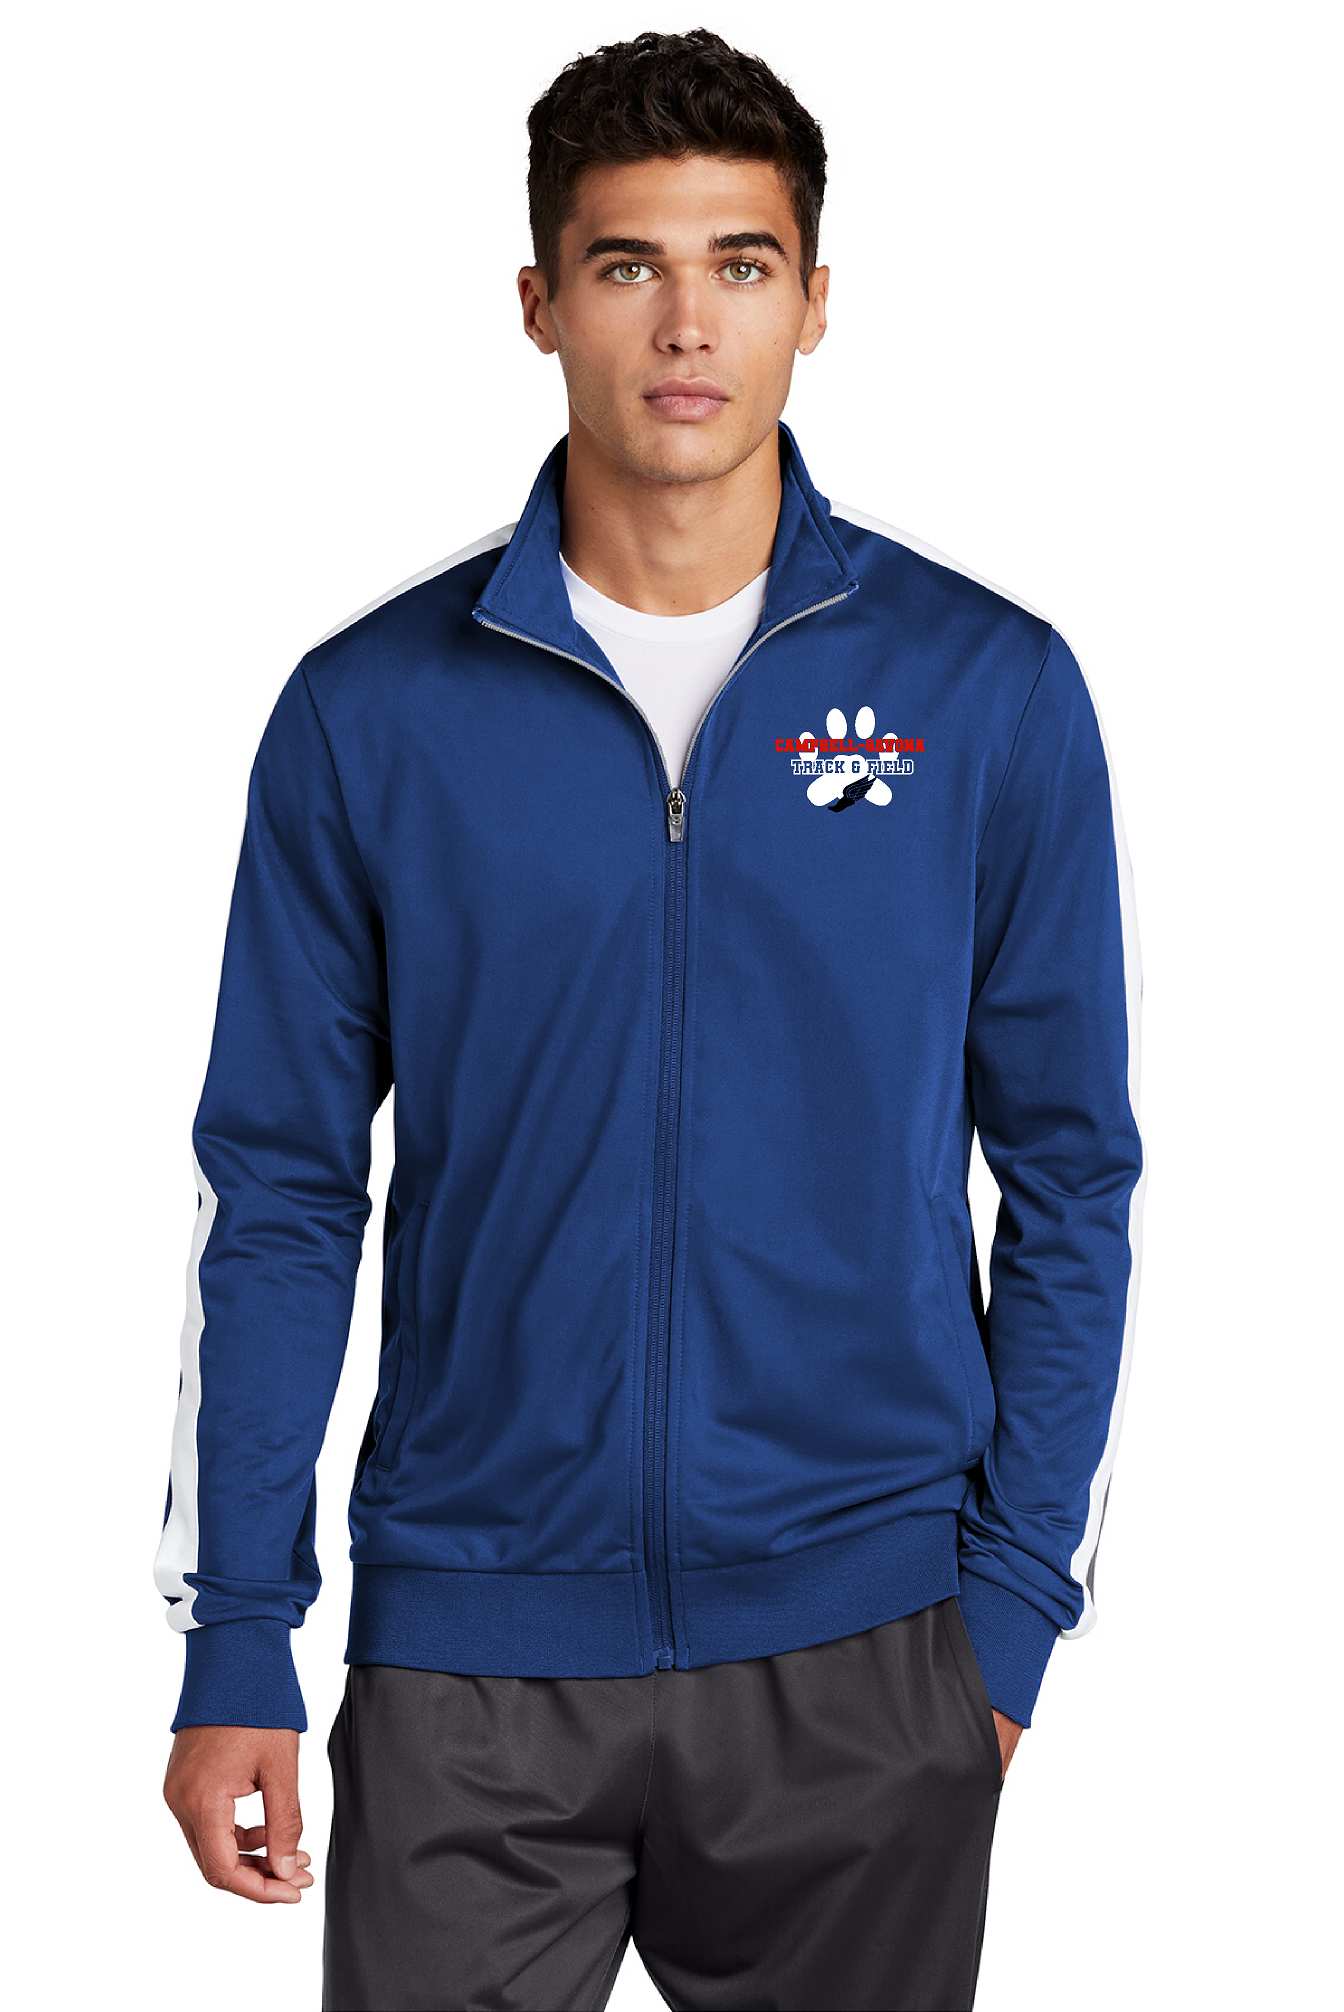 CS Track and Field Royal JST94 Sport-tek Tricot jacket – Forever 6ix Apparel